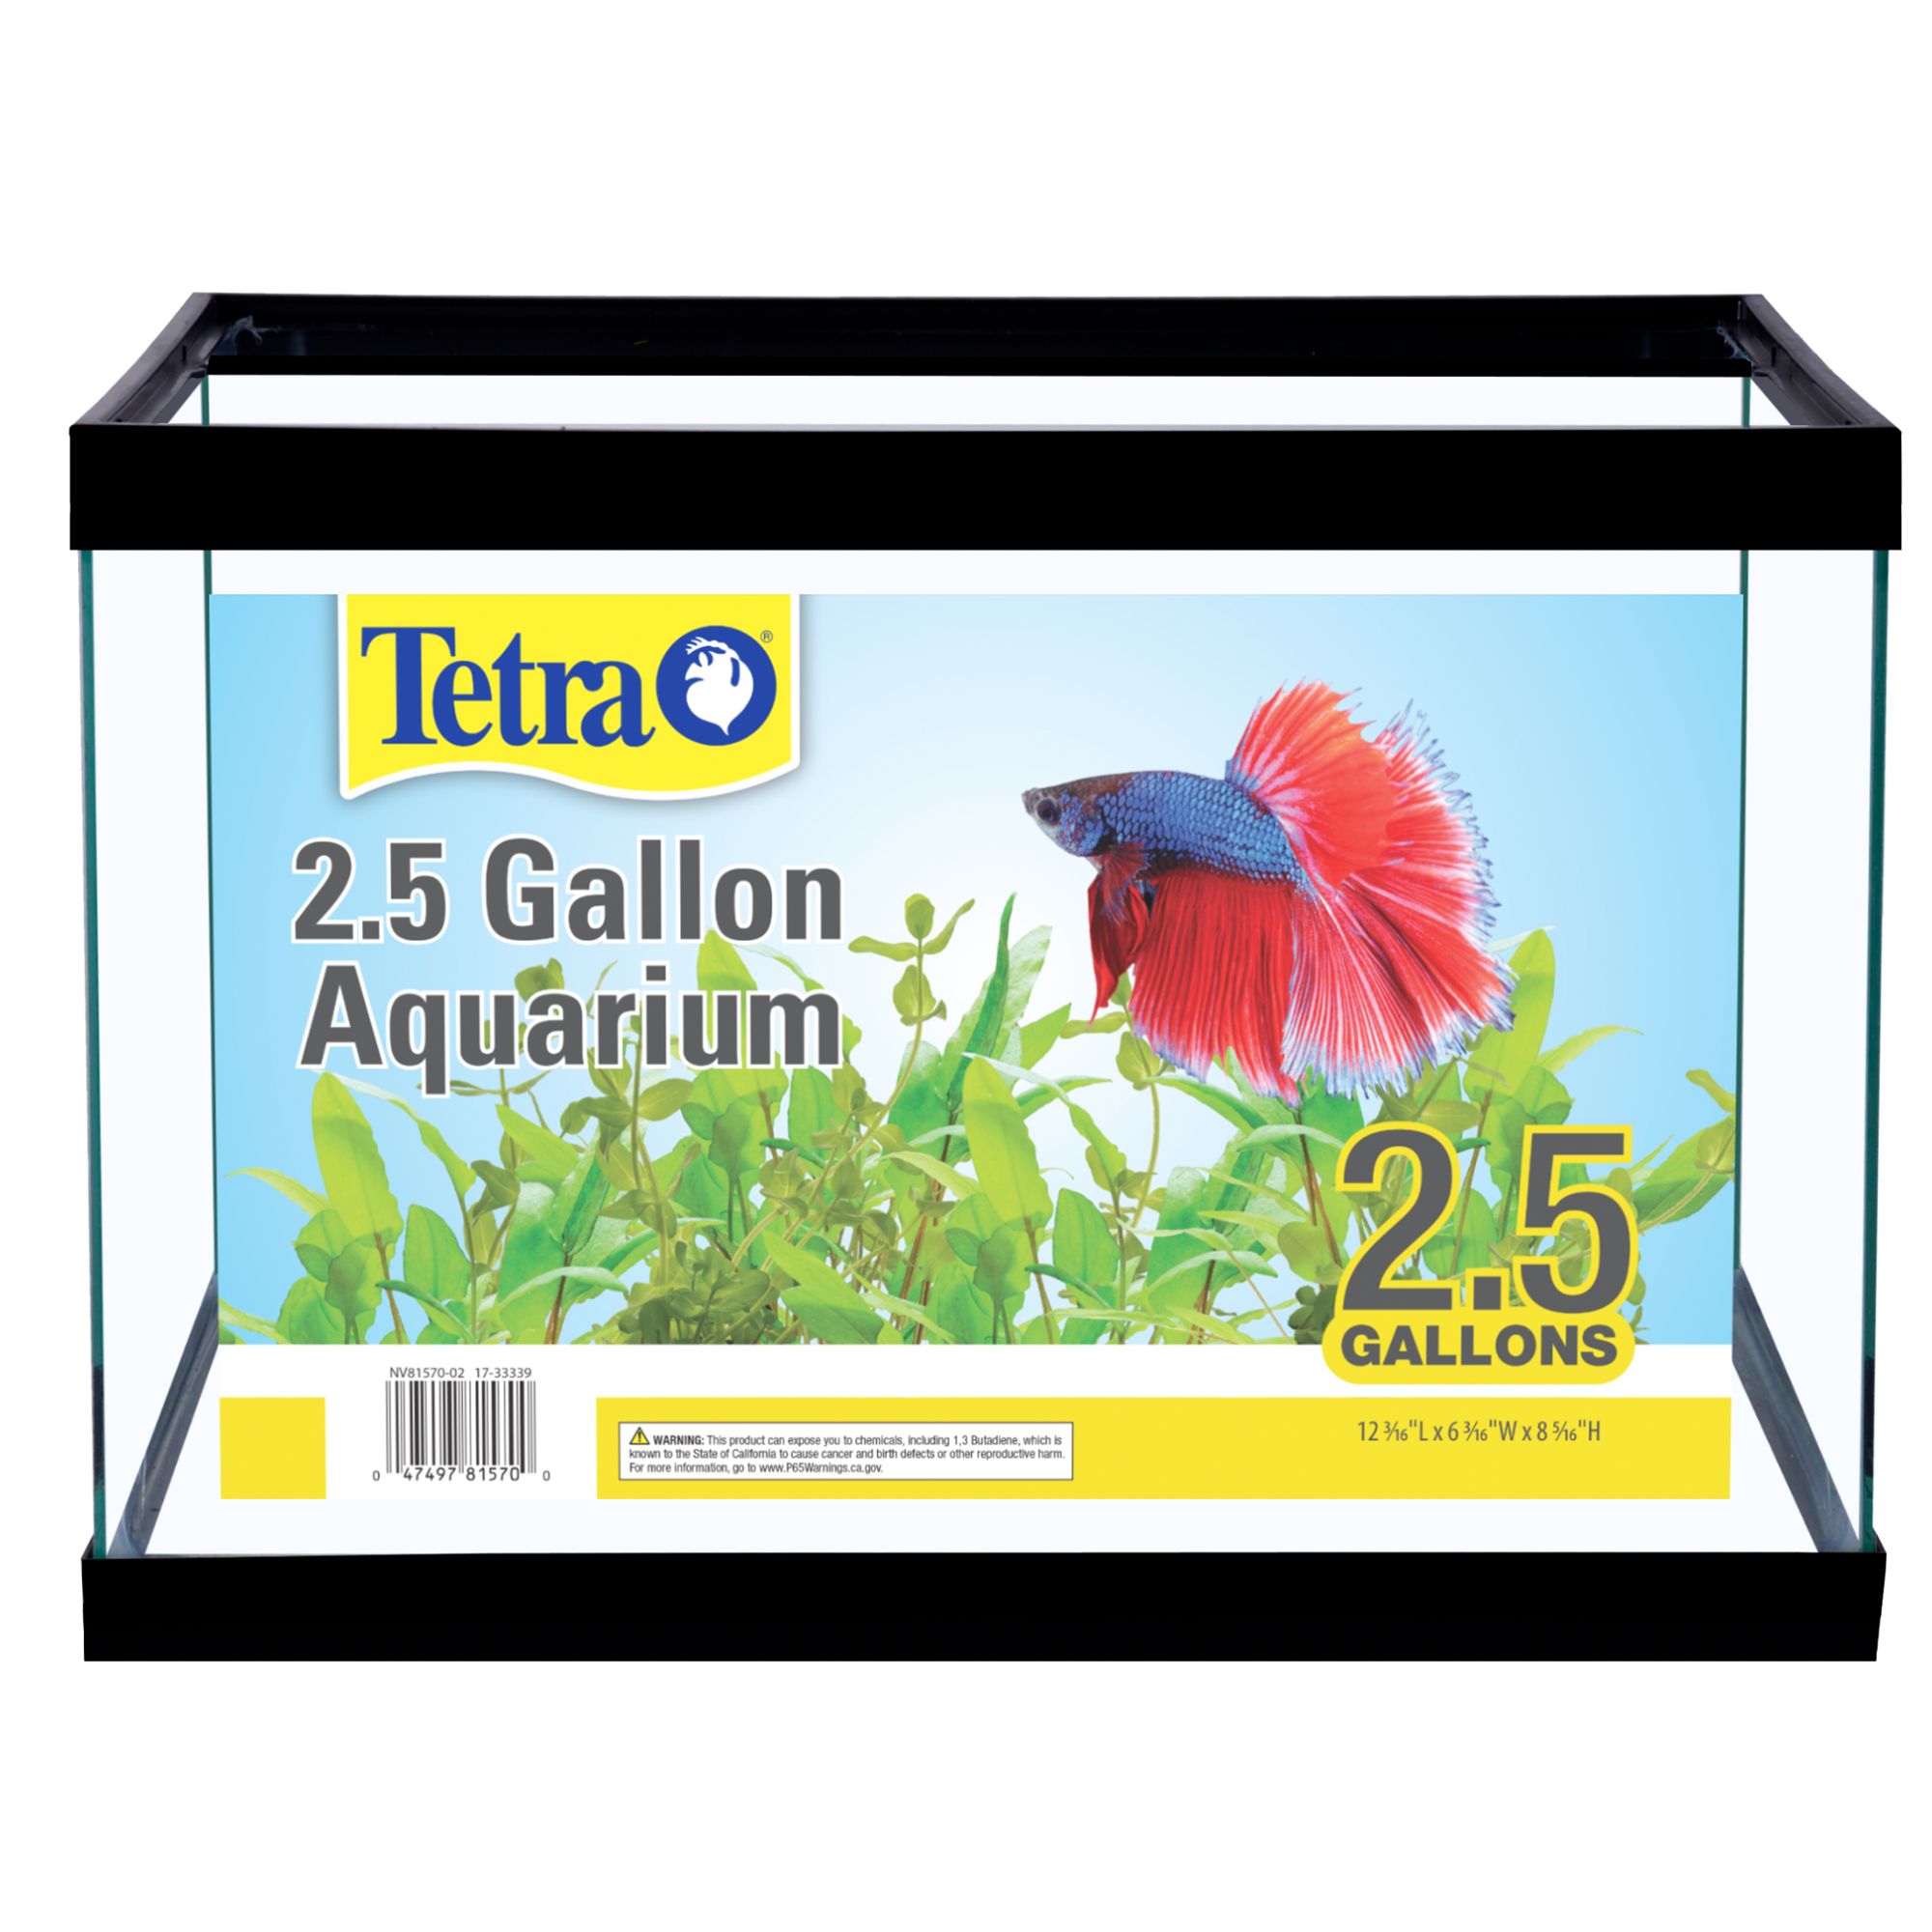 Tetra® Aquarium - 2.5 Gallon | fish 